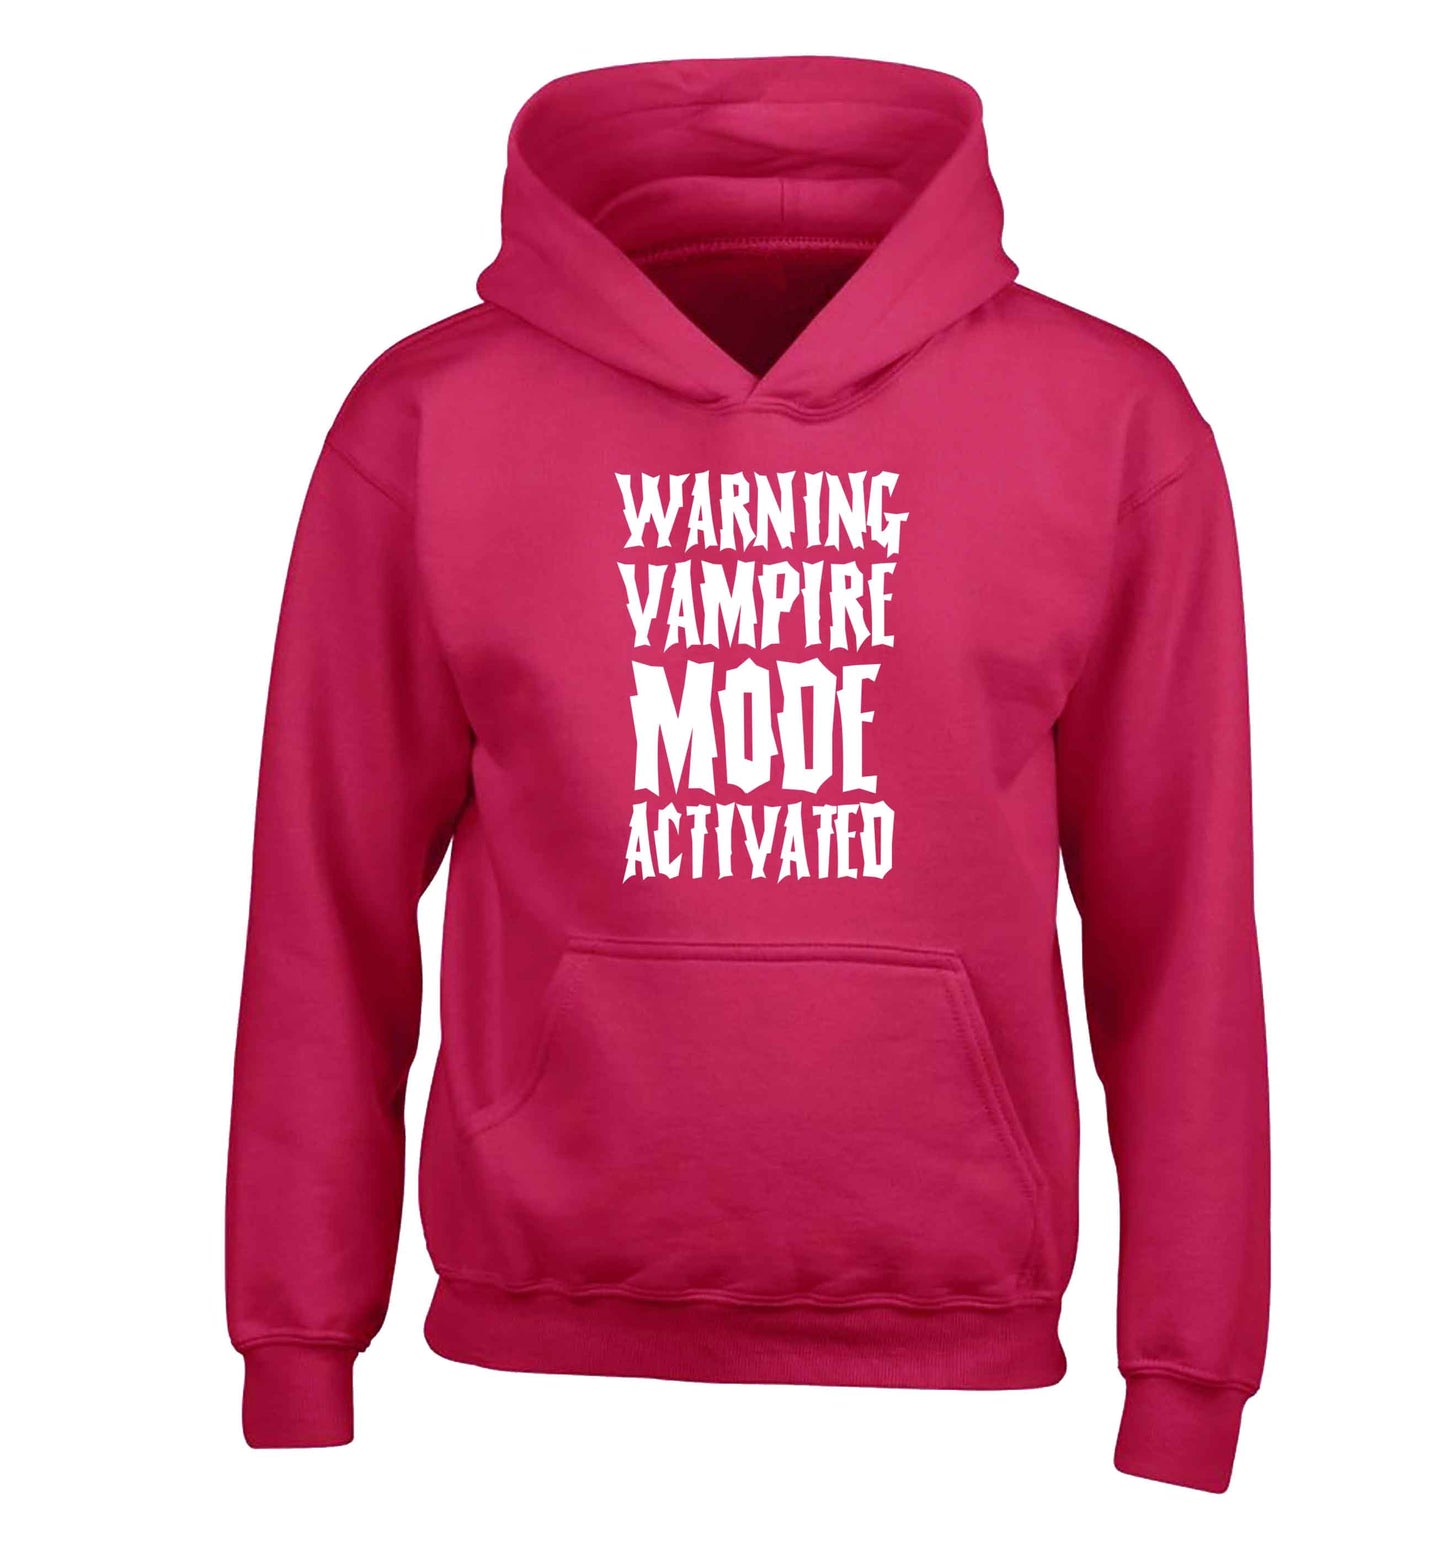 Warning vampire mode activated children's pink hoodie 12-13 Years